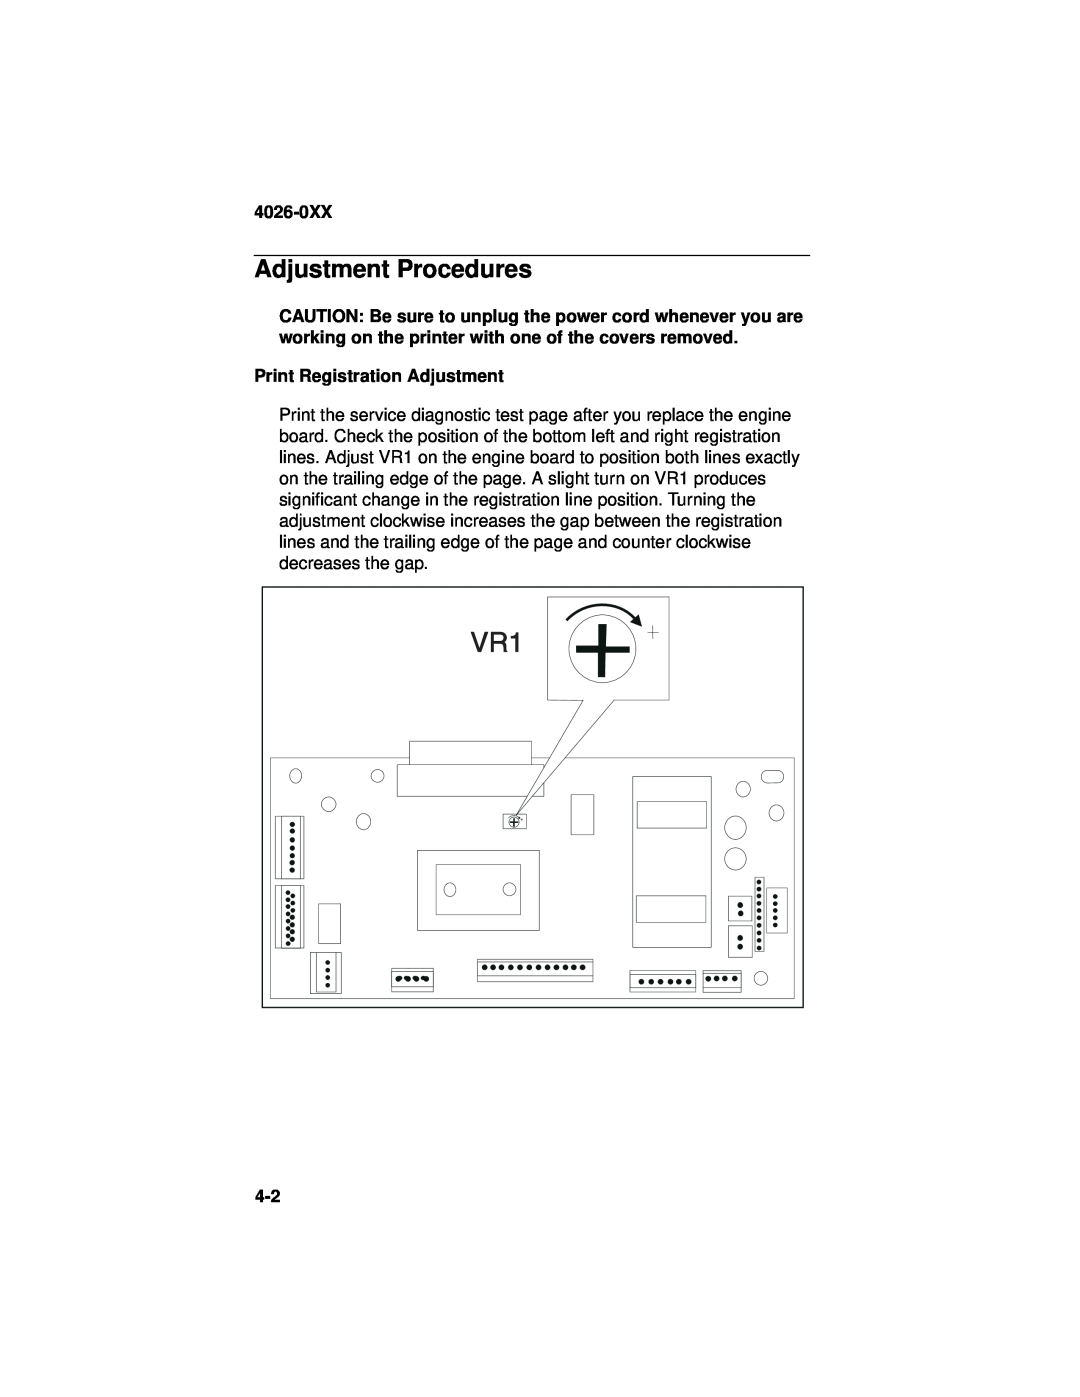 Lexmark OptraTM manual Adjustment Procedures, Print Registration Adjustment, 4026-0XX 